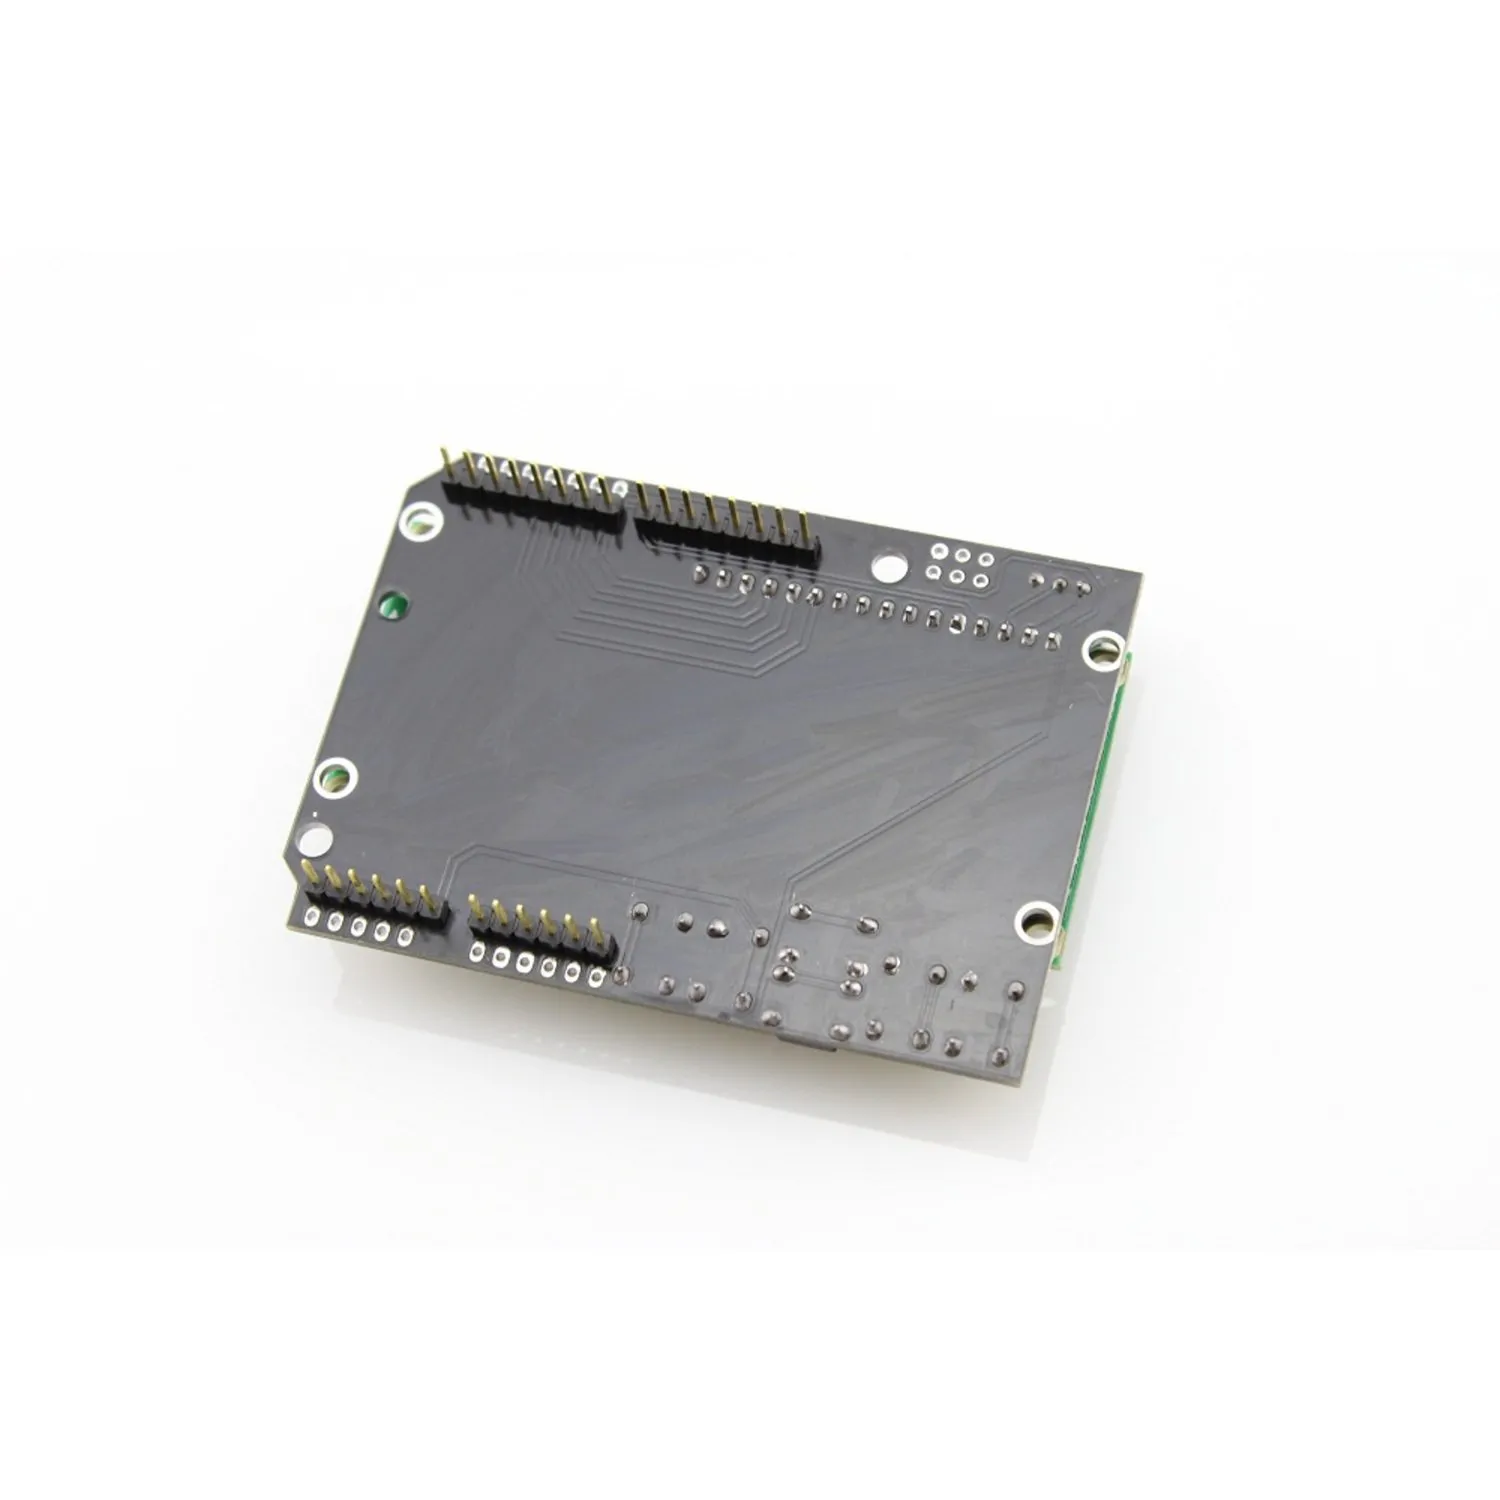 Photo of LCD Keypad Shield For Arduino